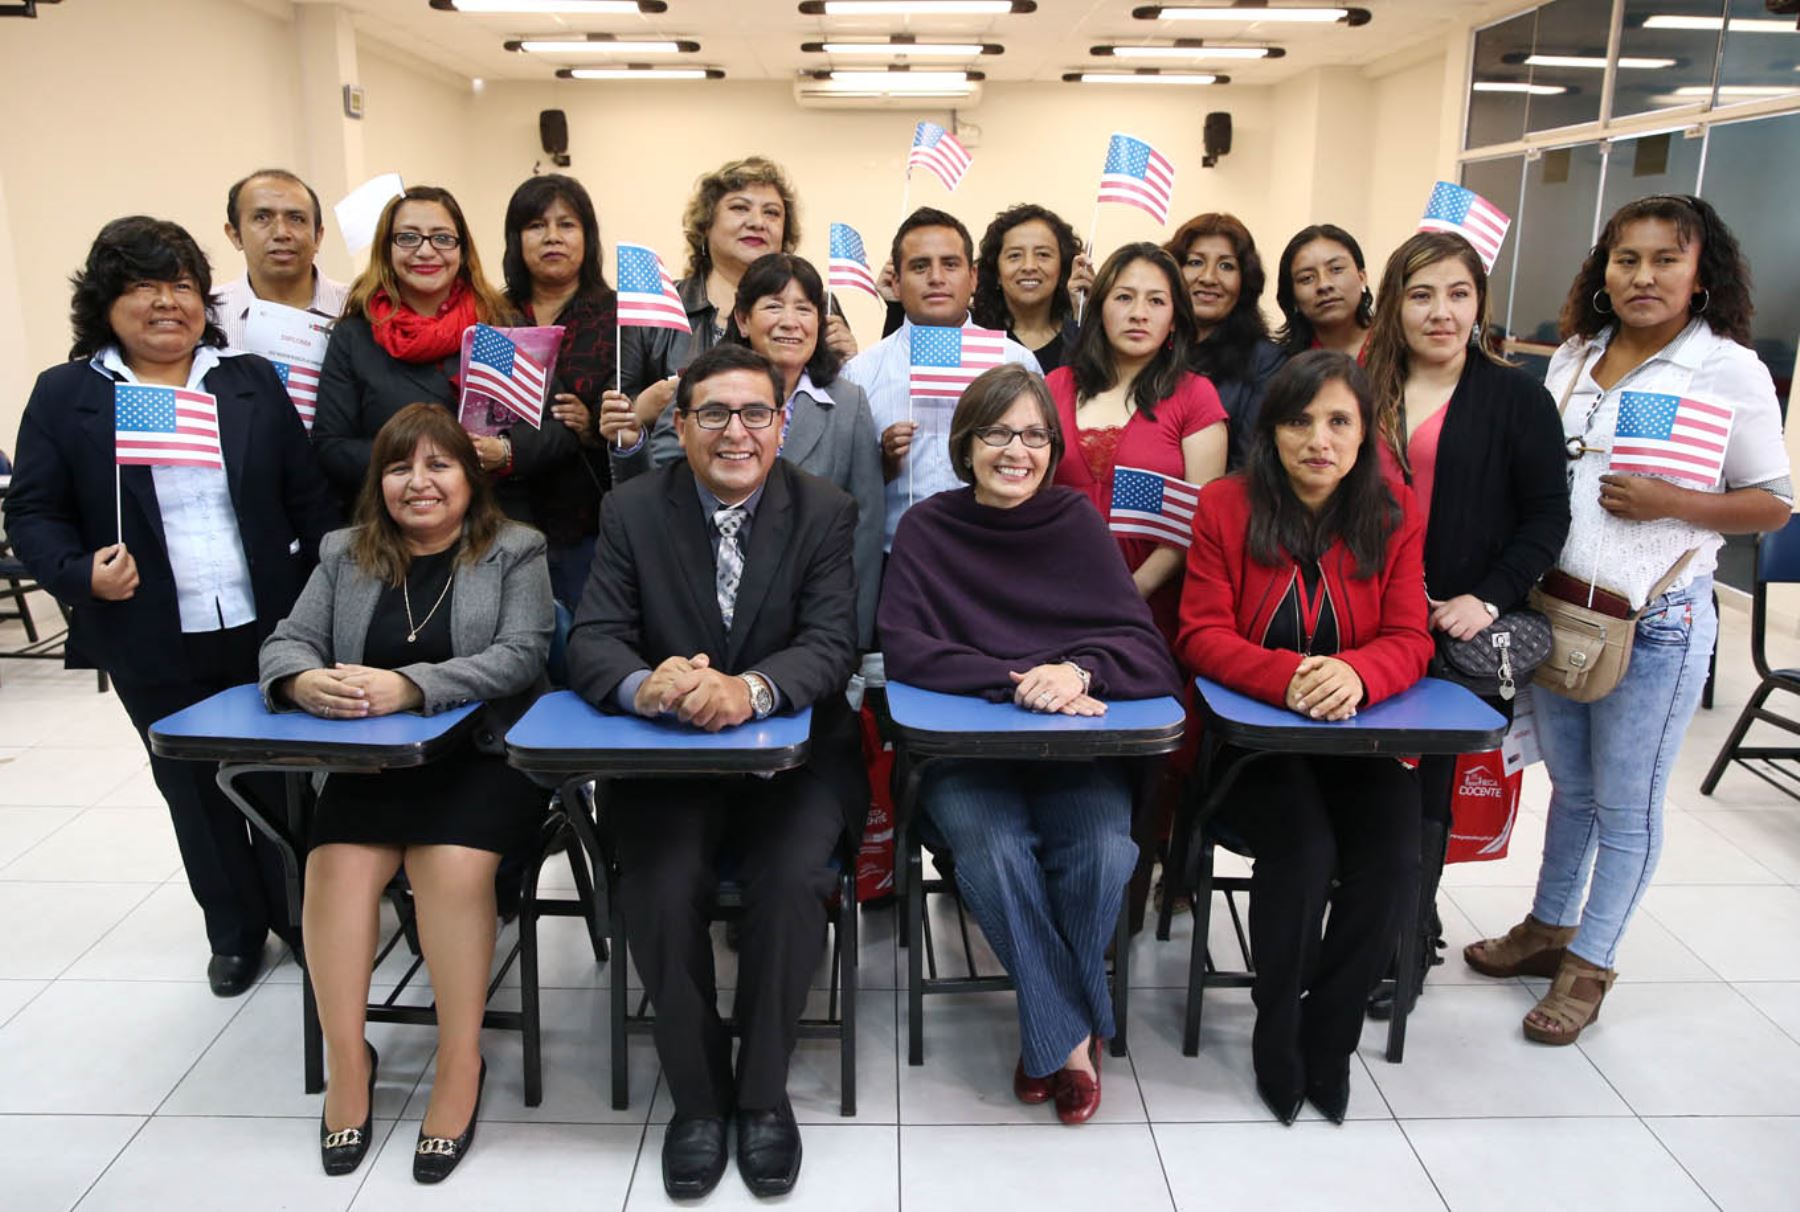 Peru’s Rural School Teachers to be Trained at U.S. University